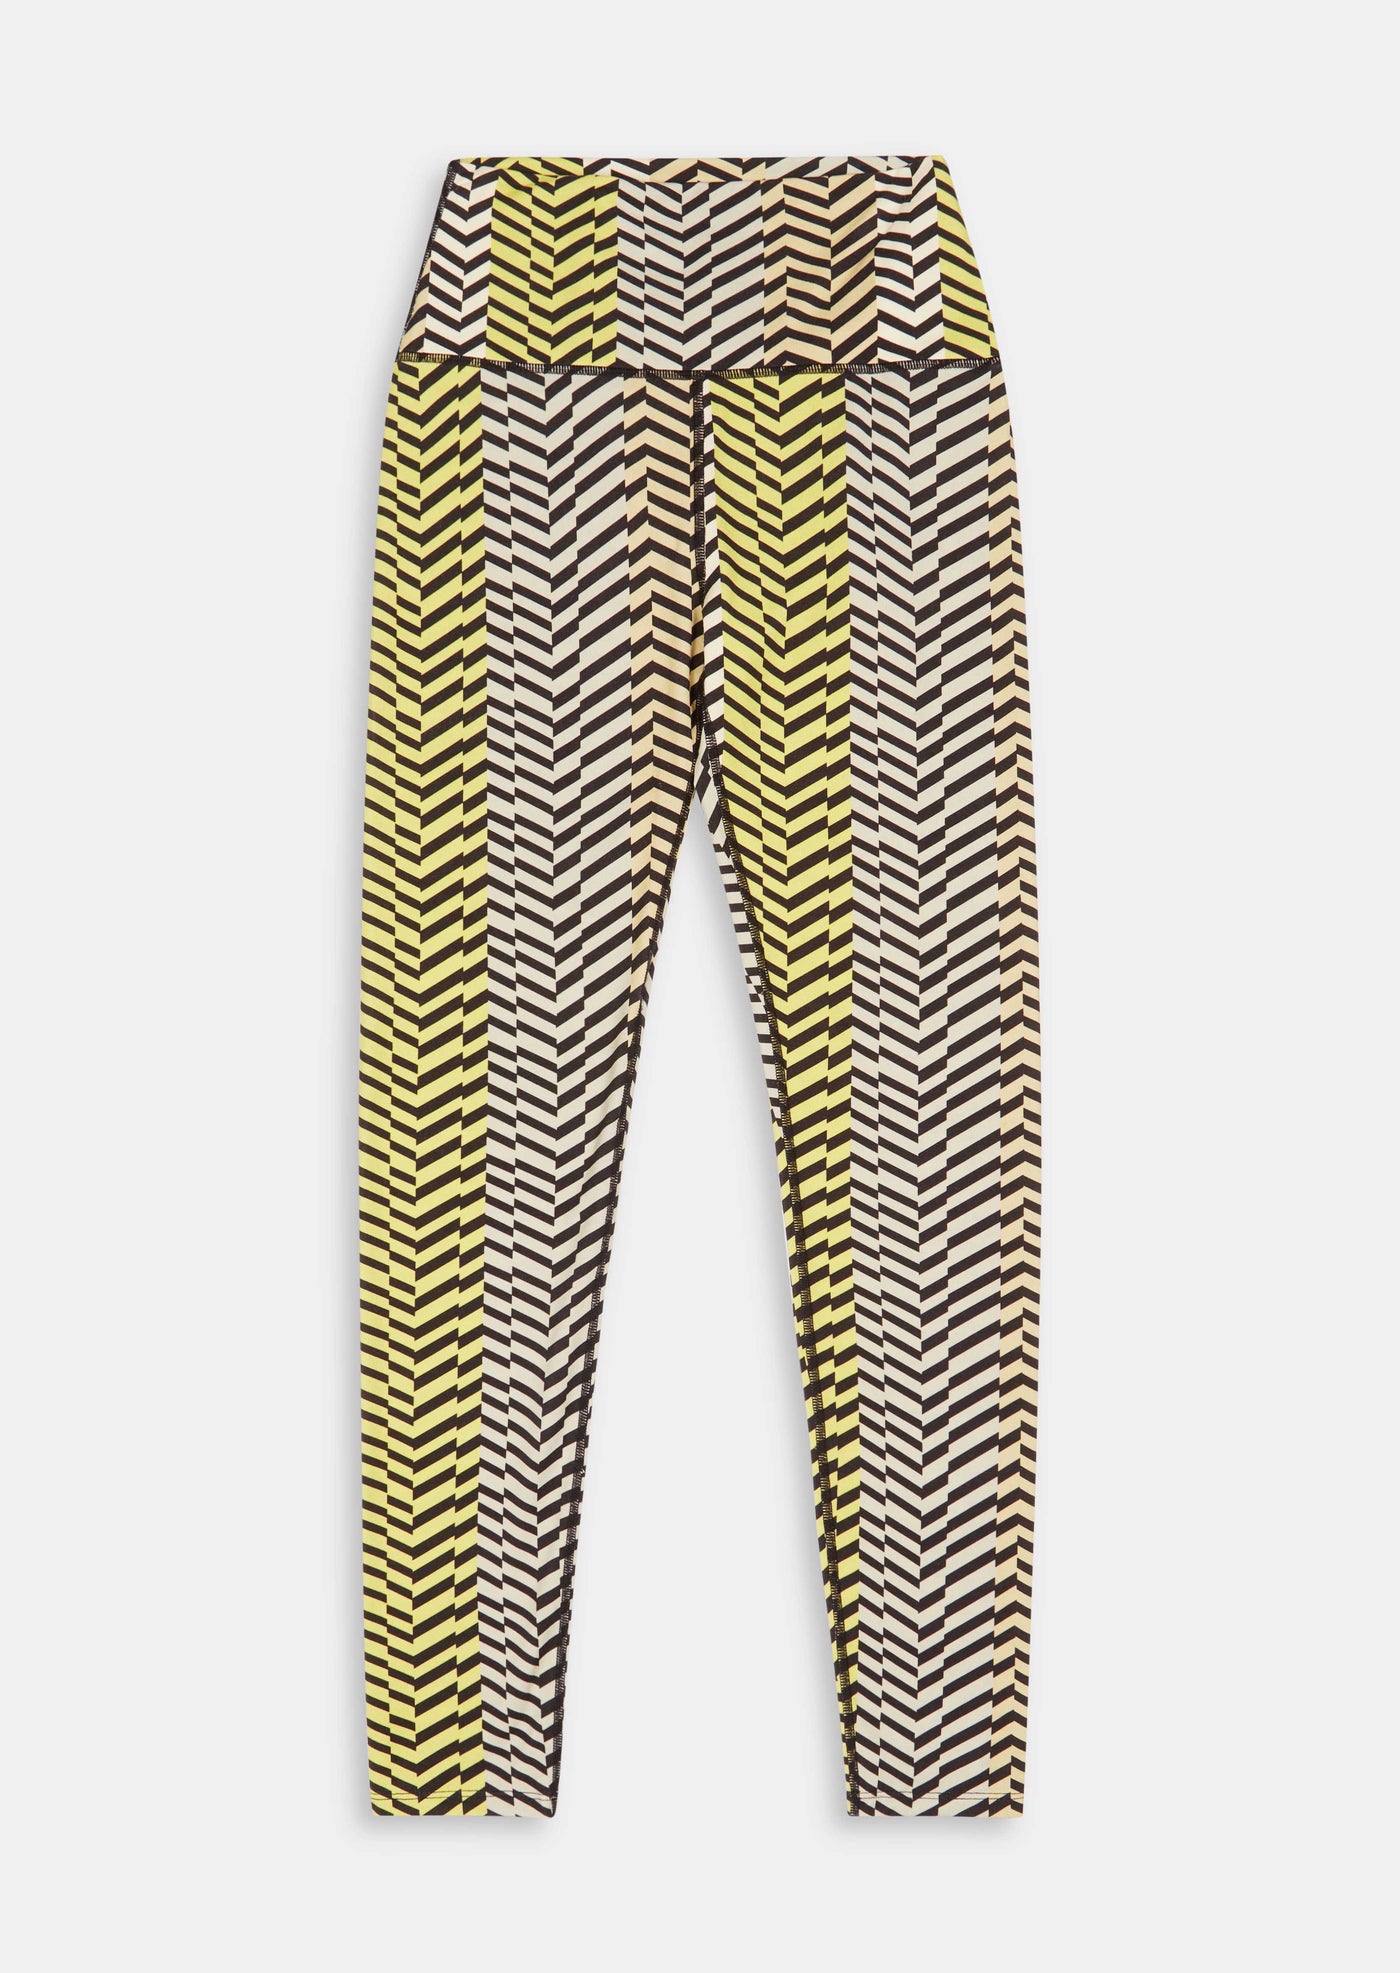 Liberté Essentiel - Nicole leggings zebra print🦓 #liberteessentiel  #danishdesign #scandinaviandesign #expressleggings #expresslevering # leggings #zebraprint